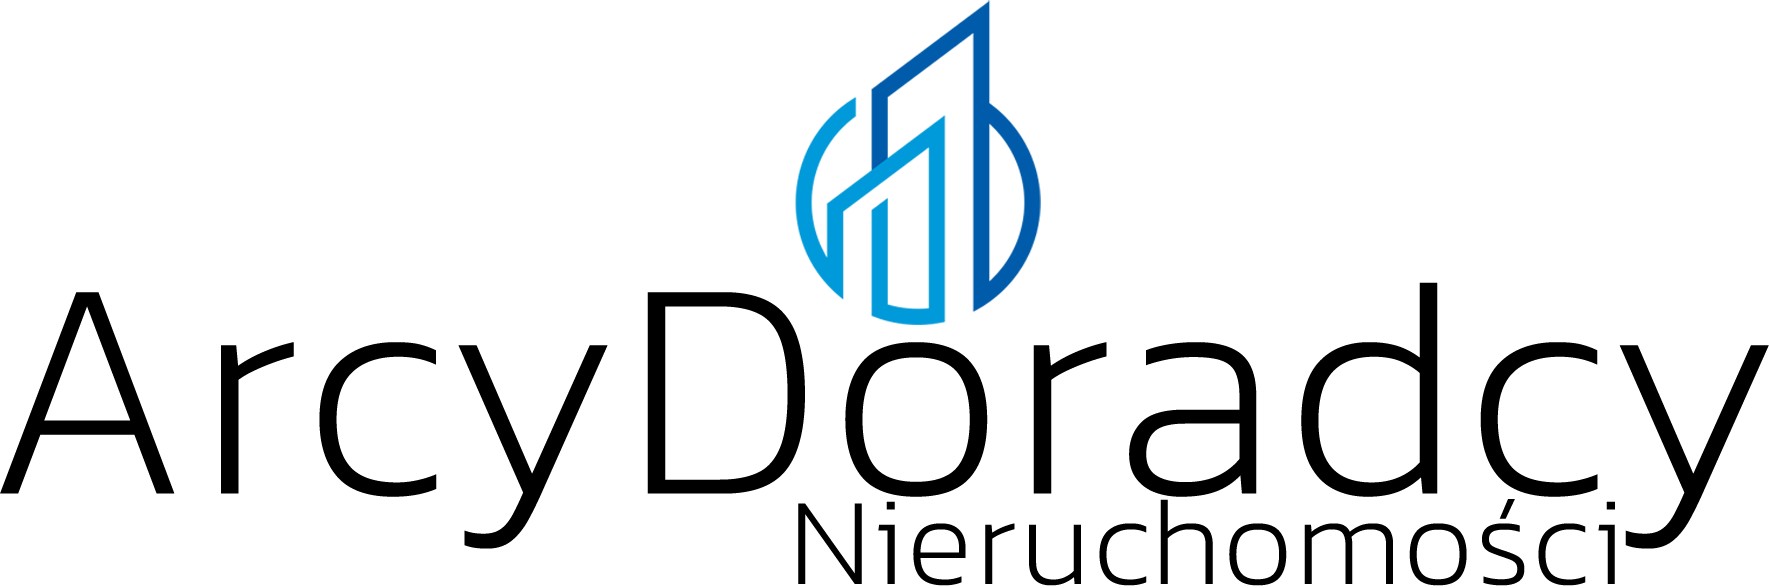 Logo ArcyDoradcy